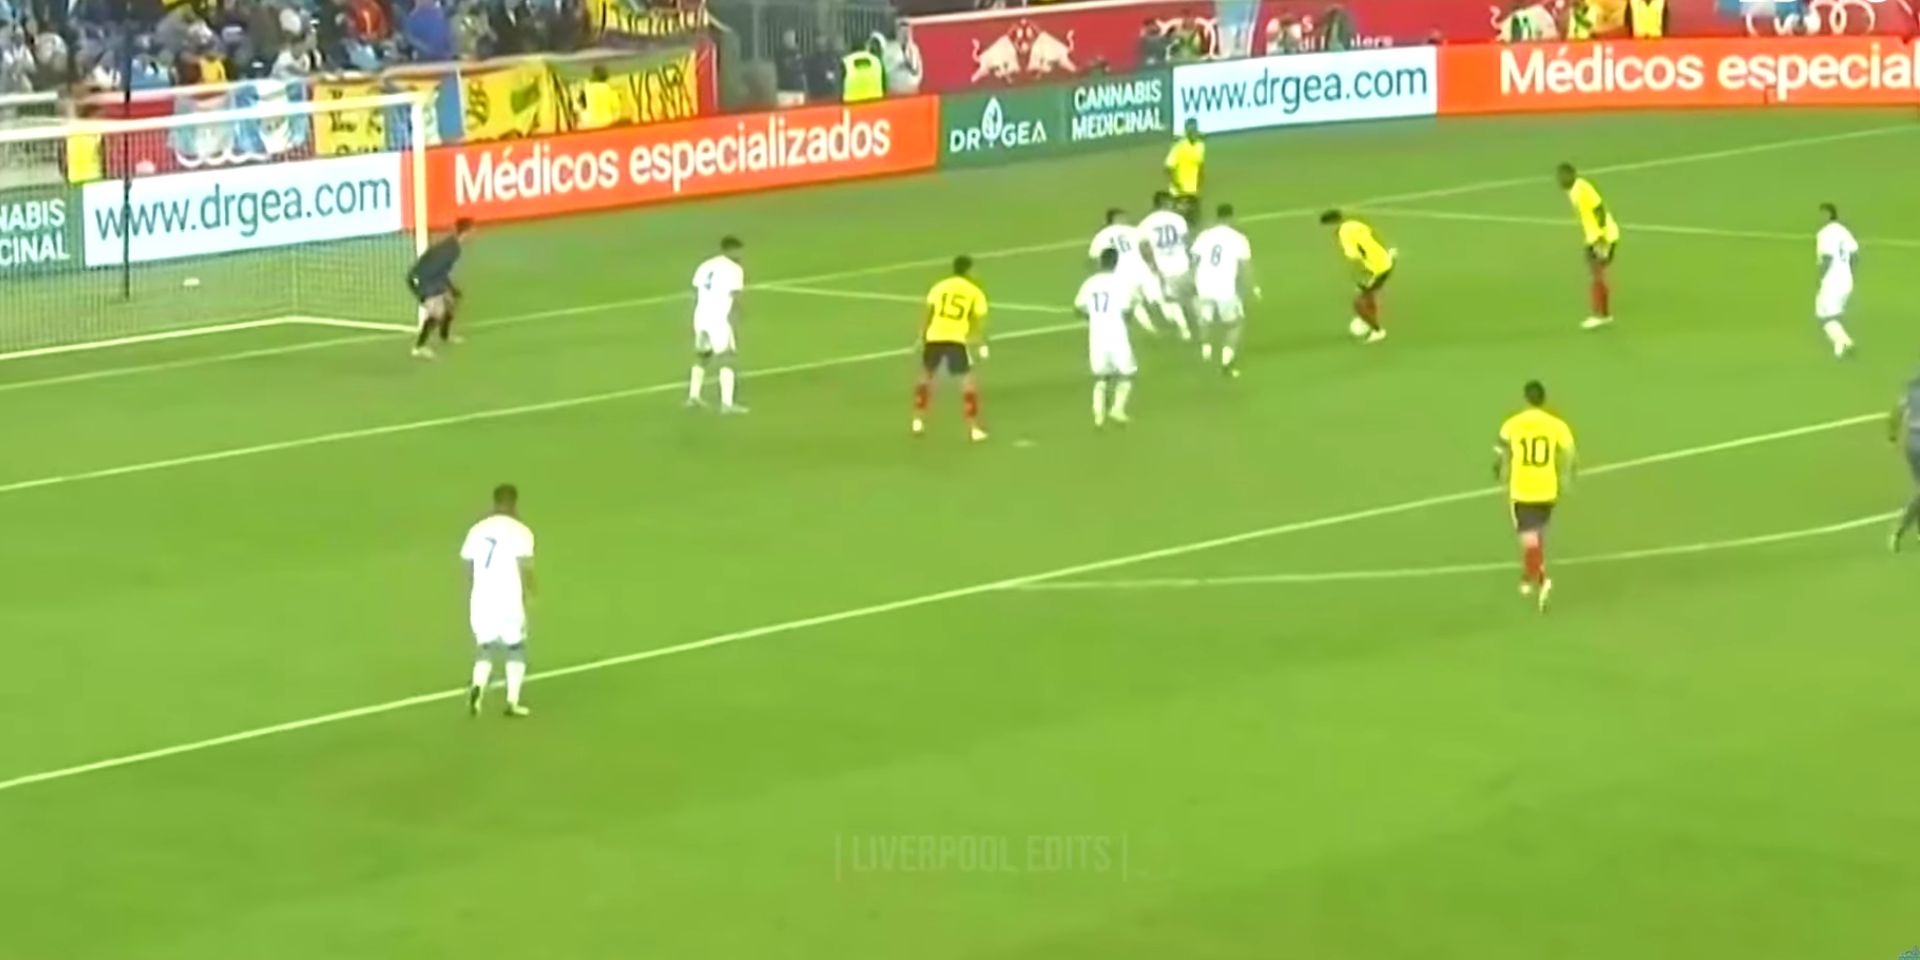 (Video) Luis Diaz’s performance against Guatemala showcases his dribbling skills